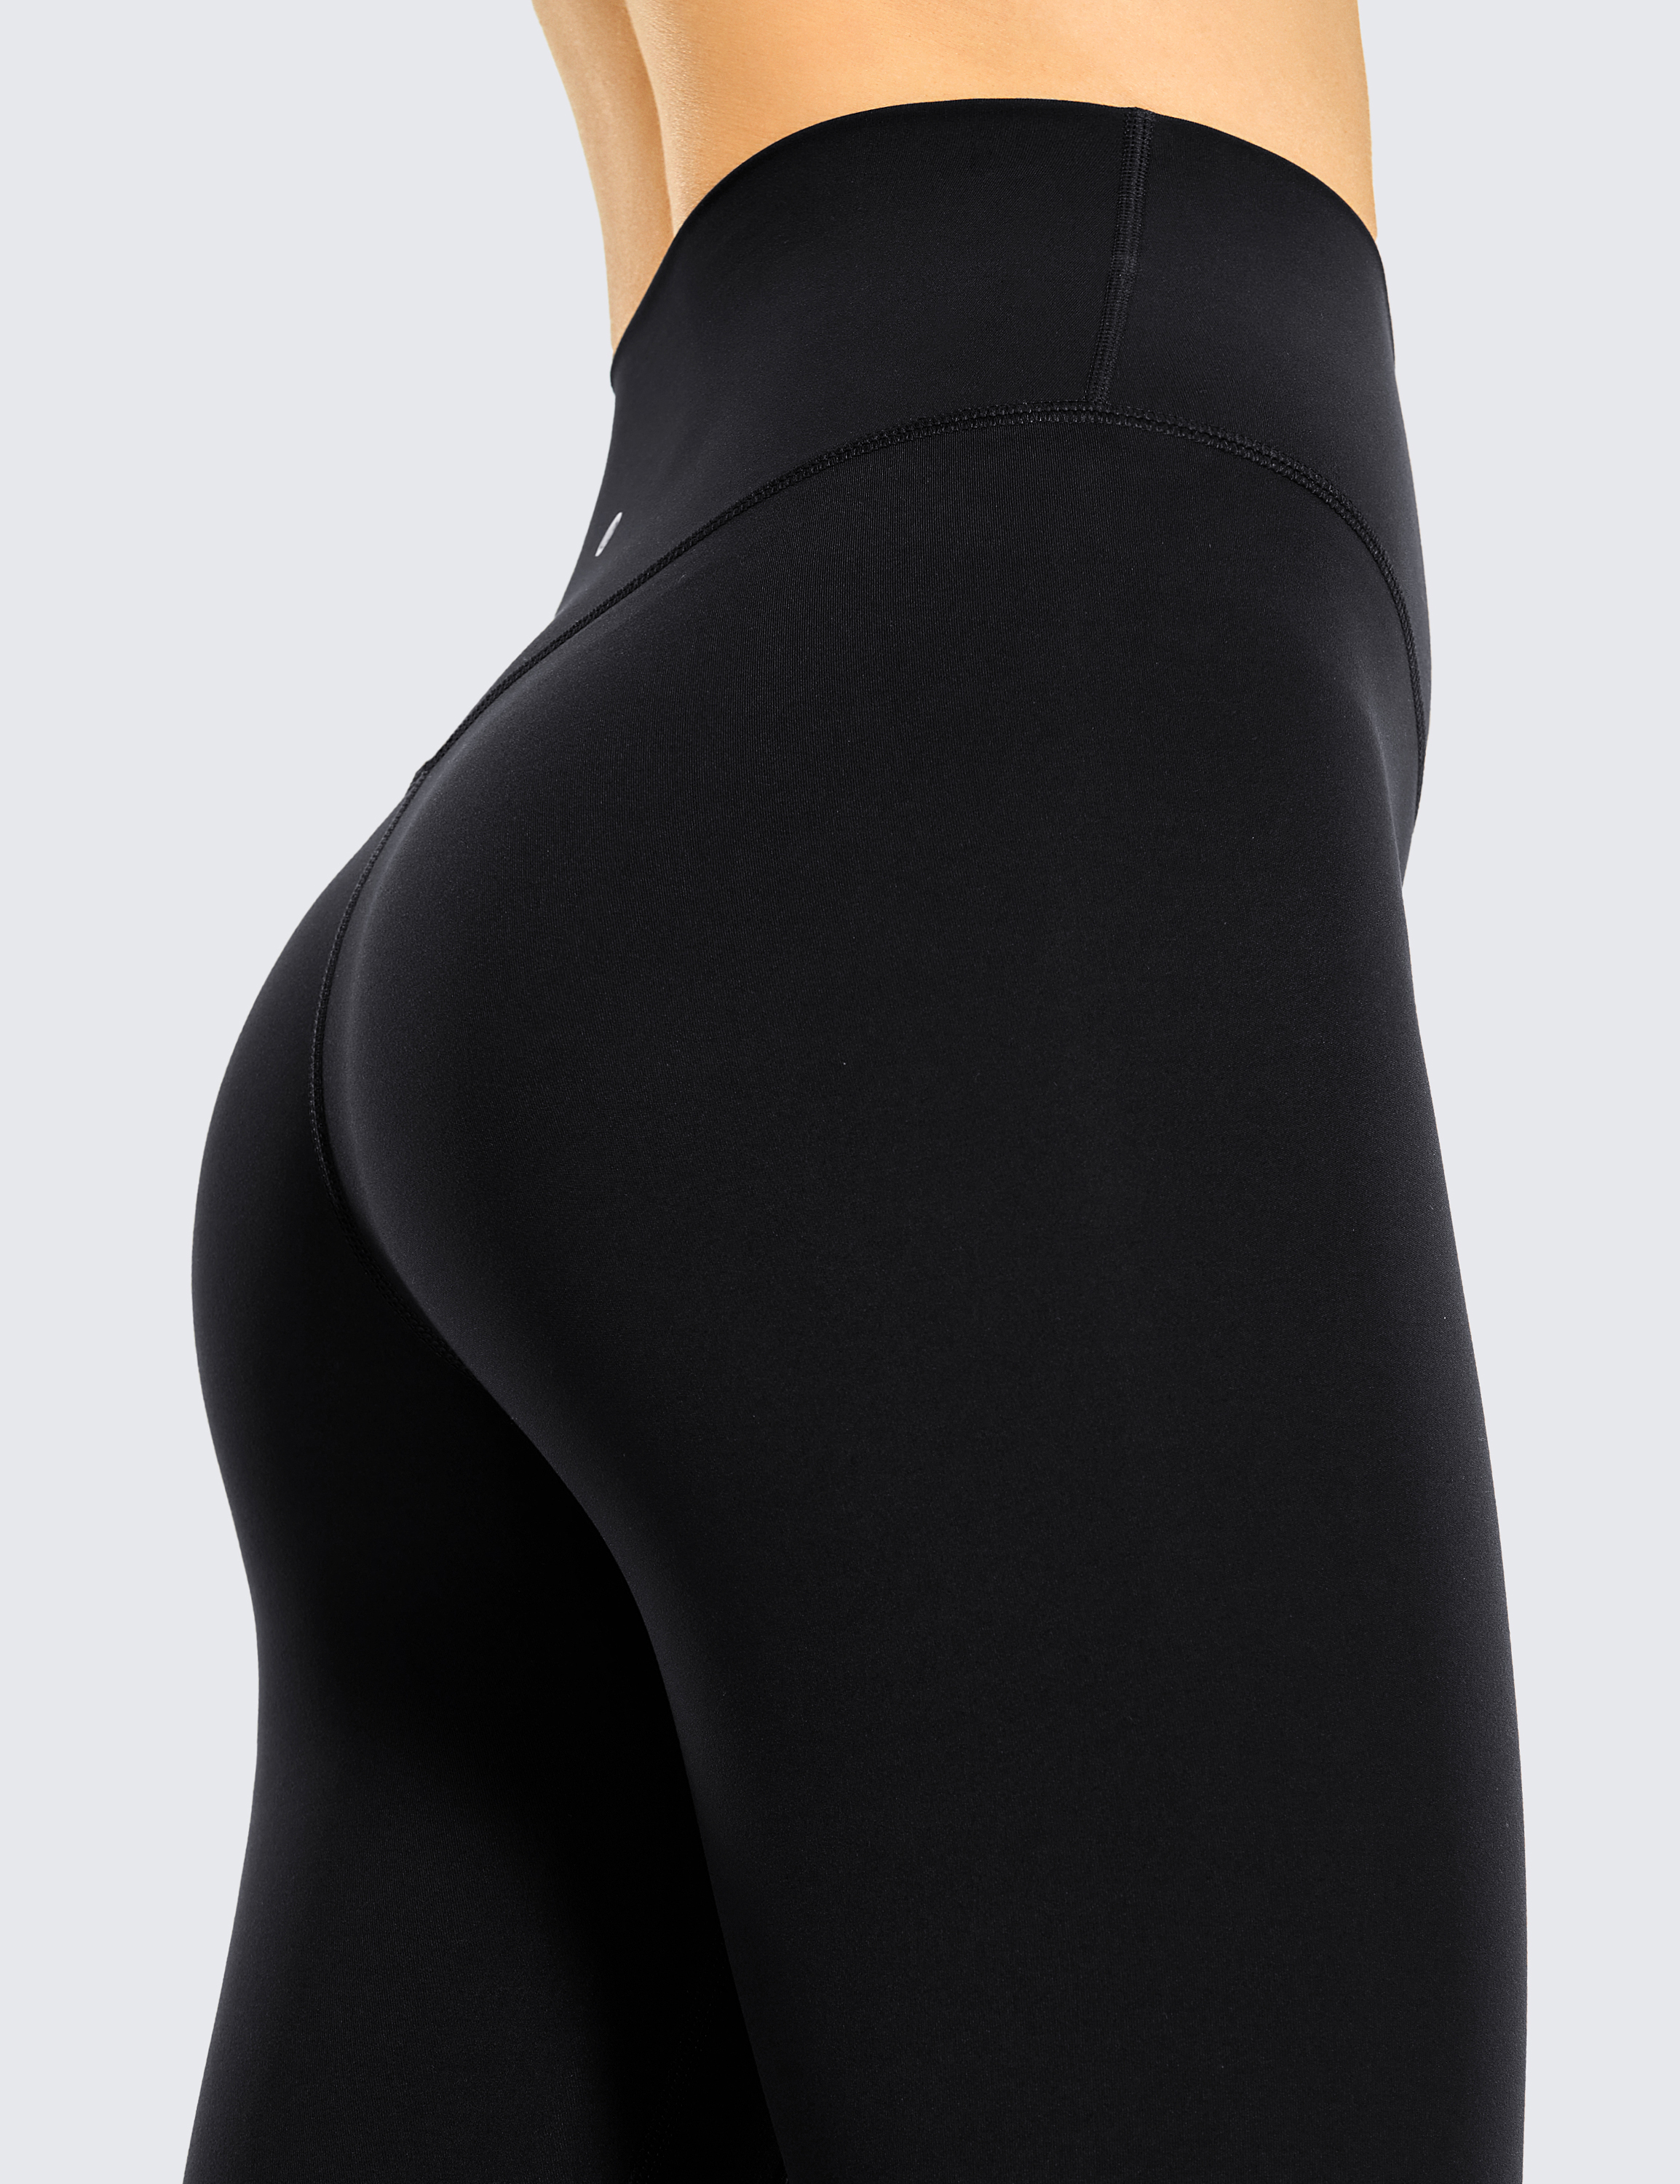 Buy CRZ YOGA Women's Naked Feeling Yoga Pants with Pockets High